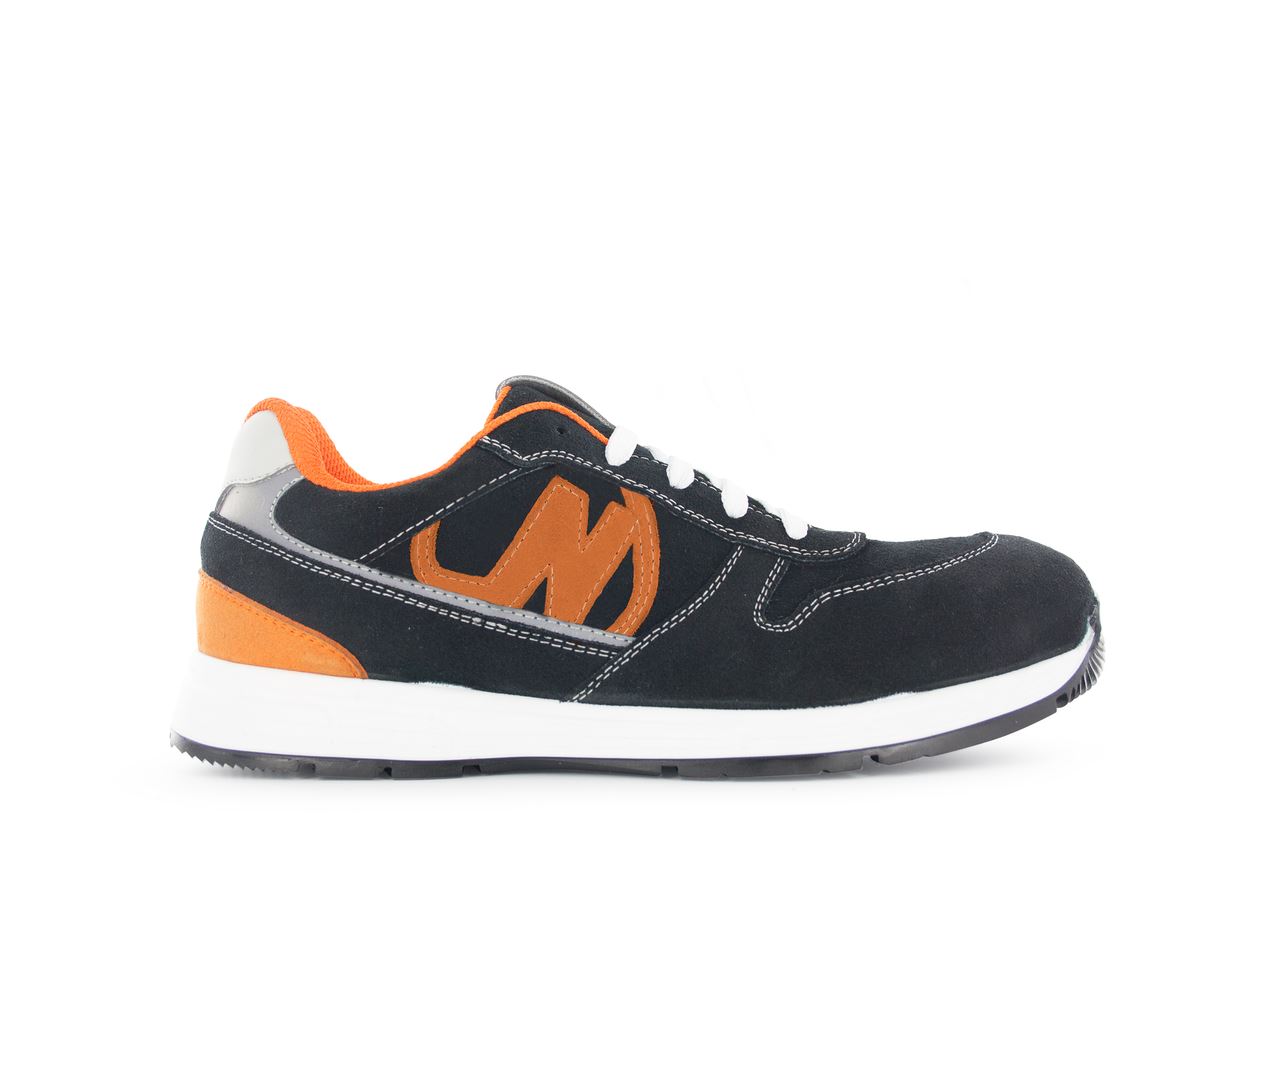 Chaussure de sécurité noir/orange Run Soft T.38 - Nord'Ways - RUN000338000NOOR